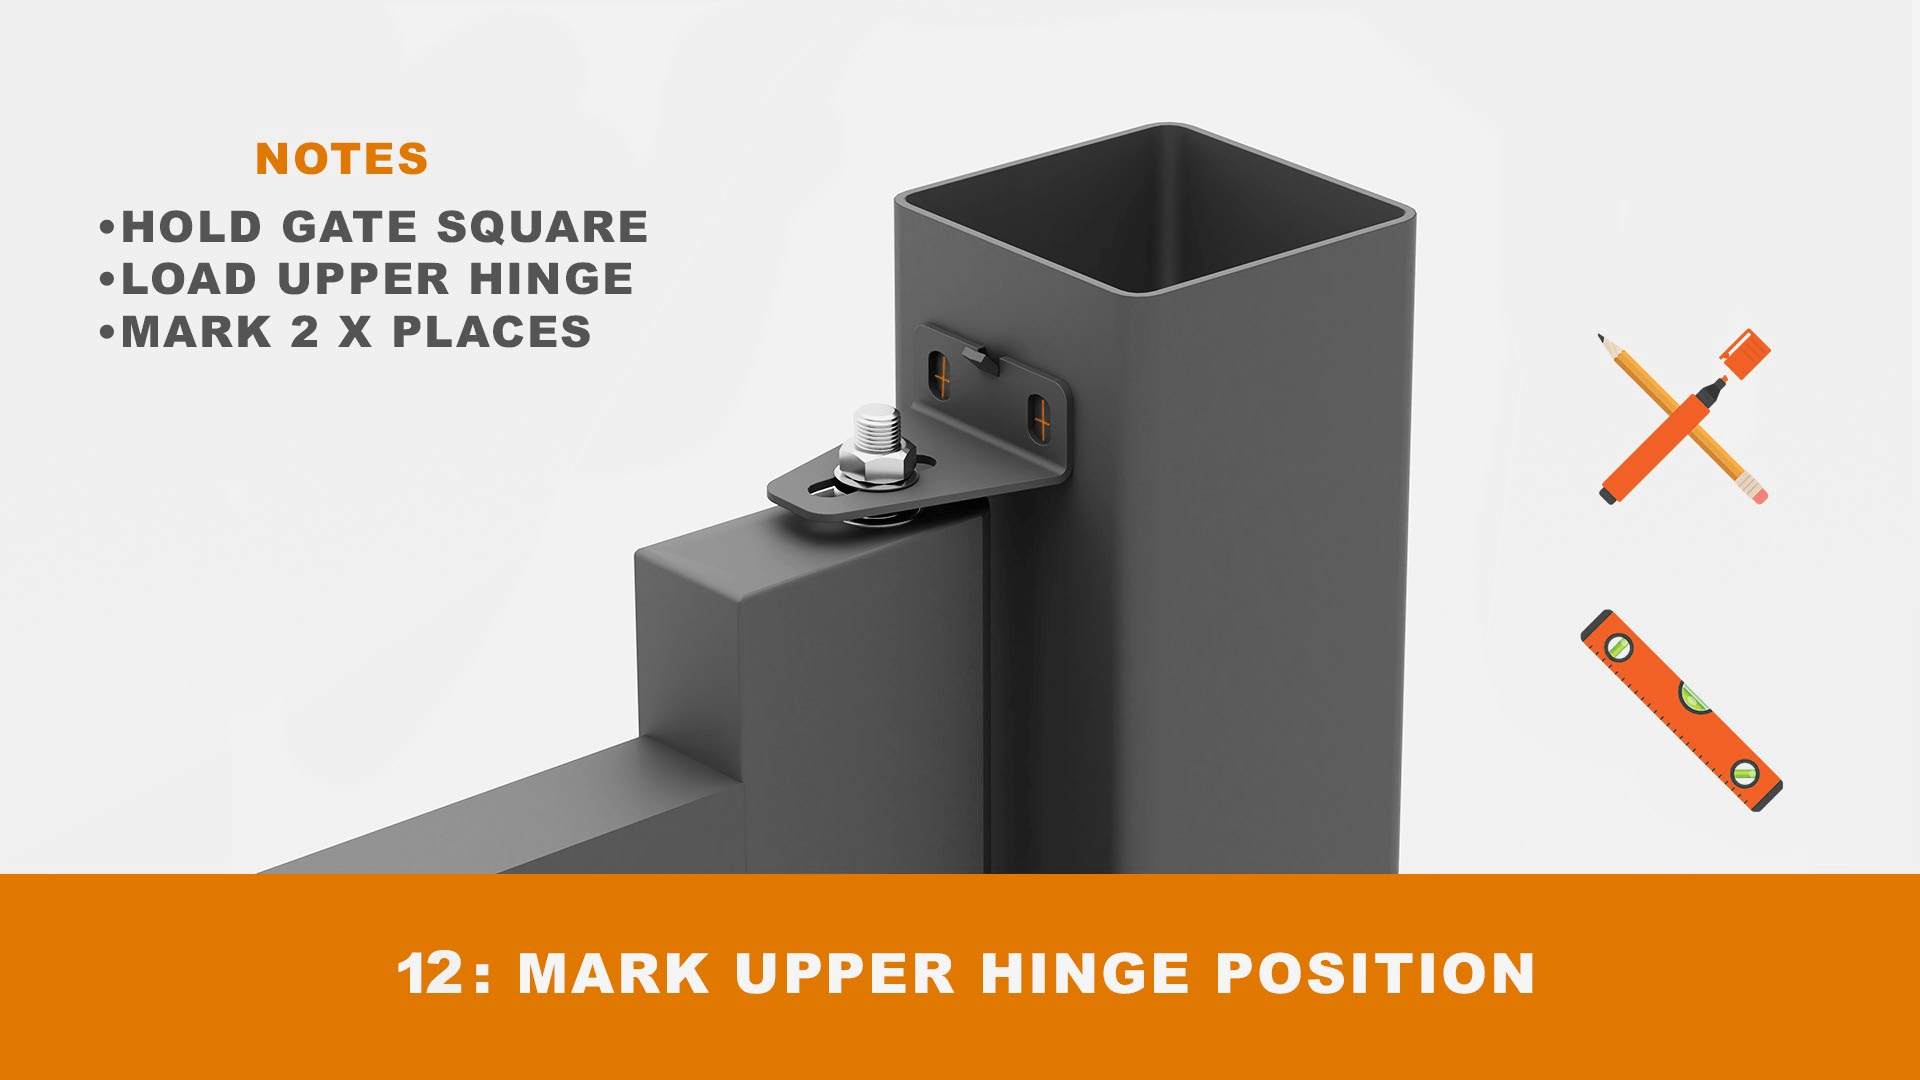 Mark upper hinge position on the post